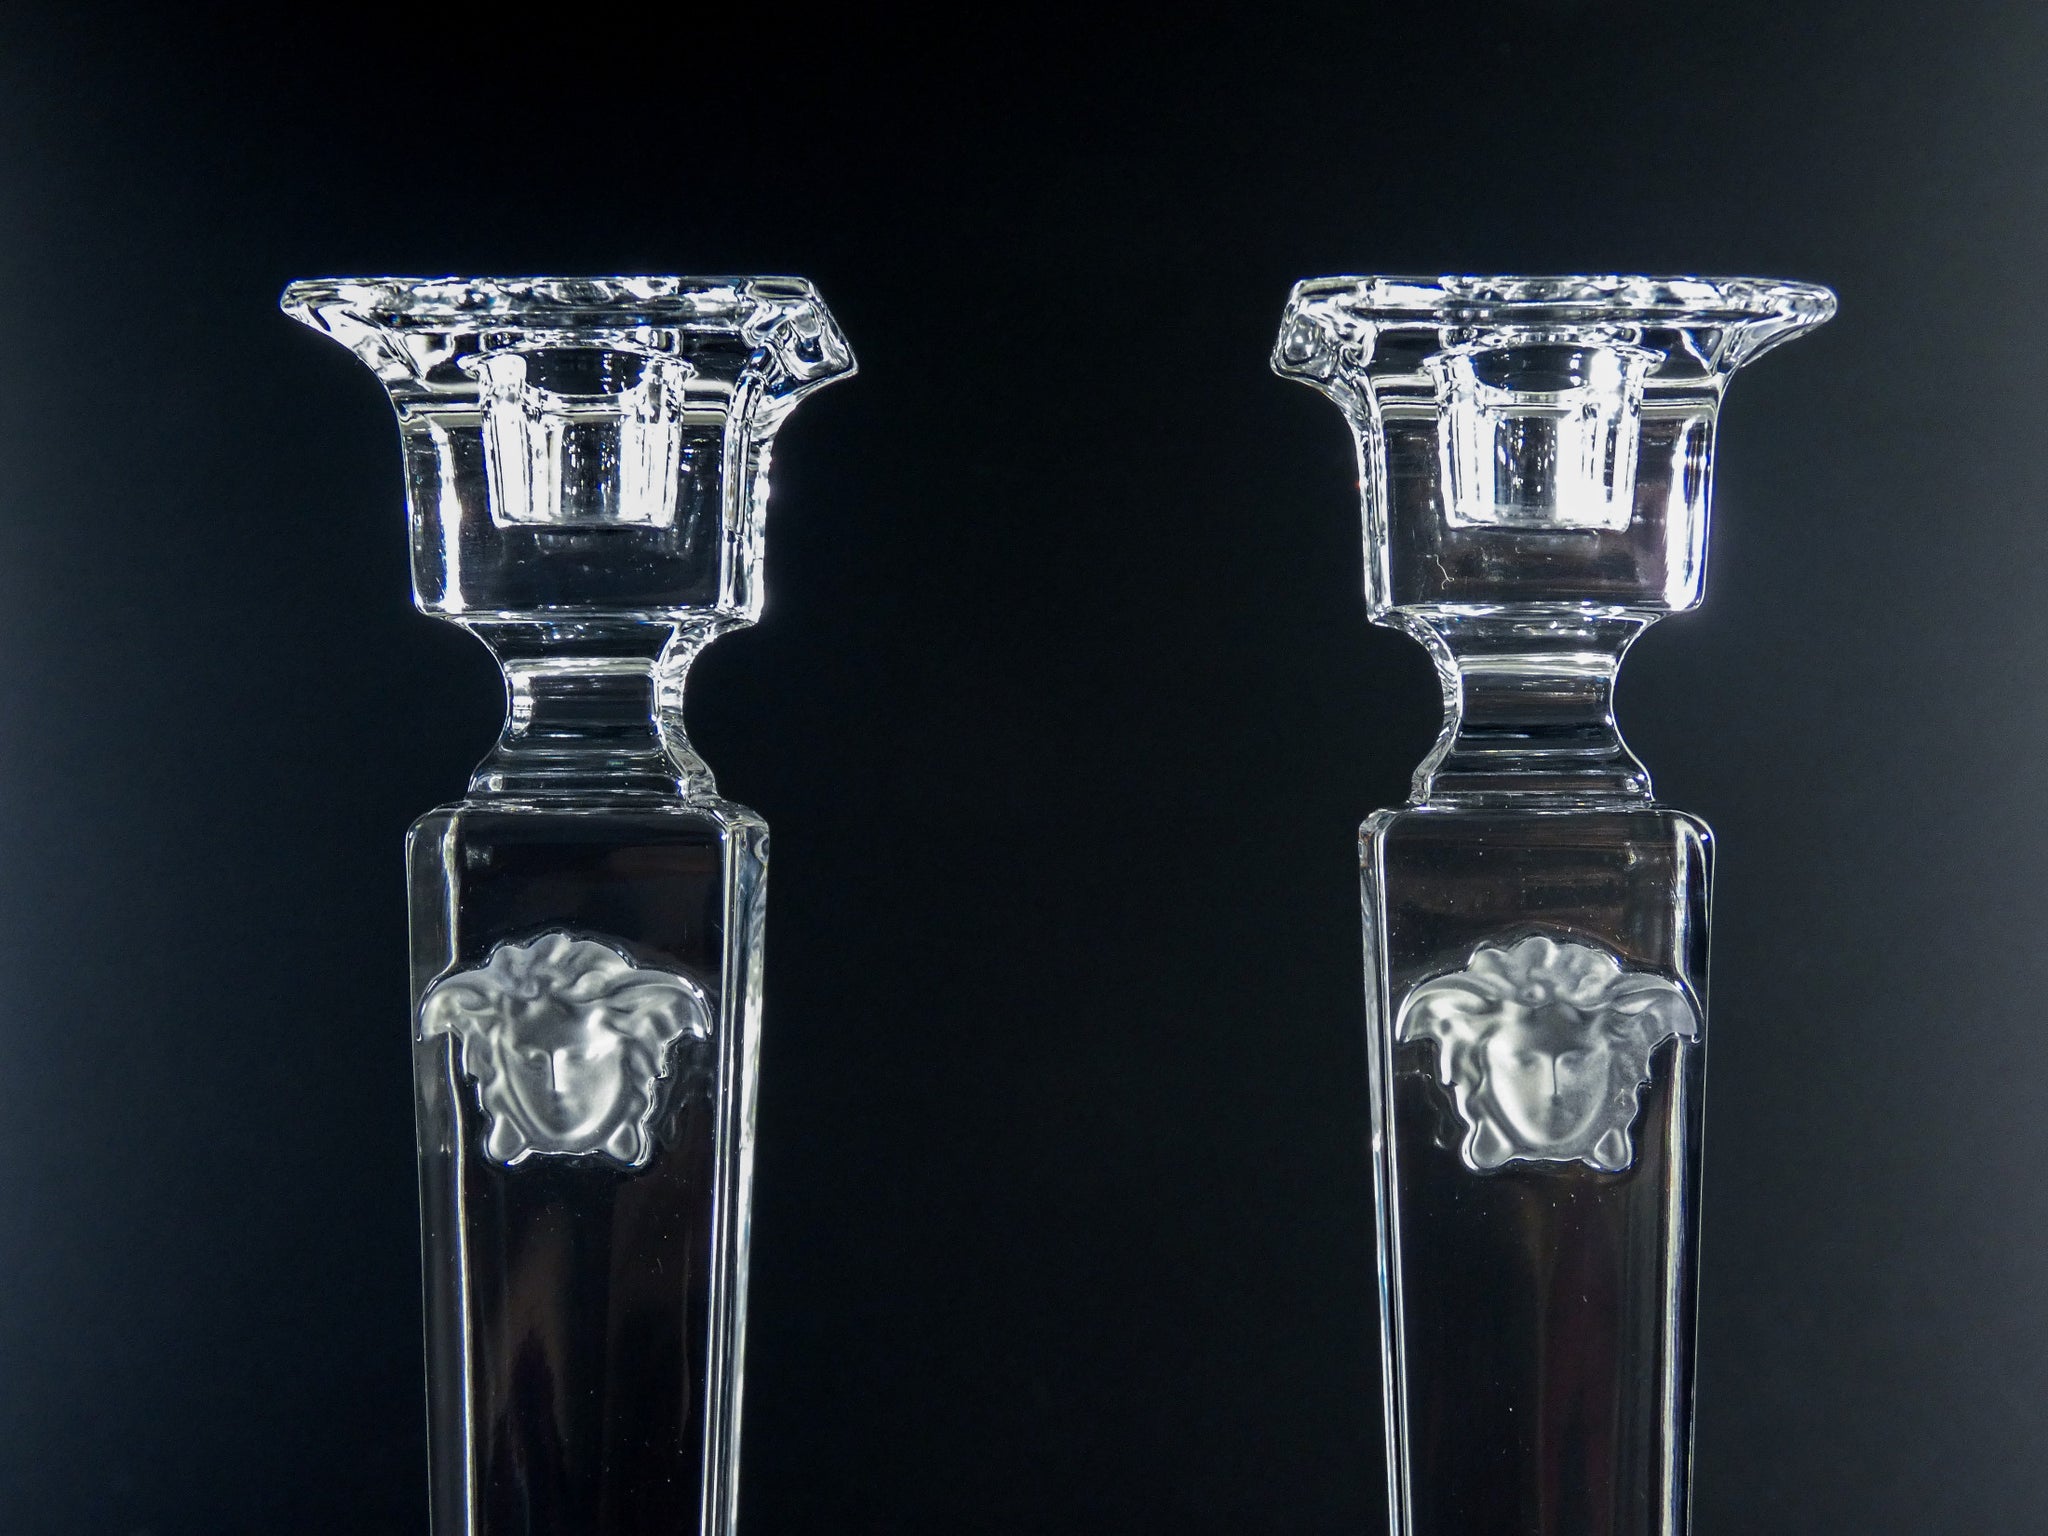 coppia candelieri design rosenthal per versace medusa gorgona cristallo